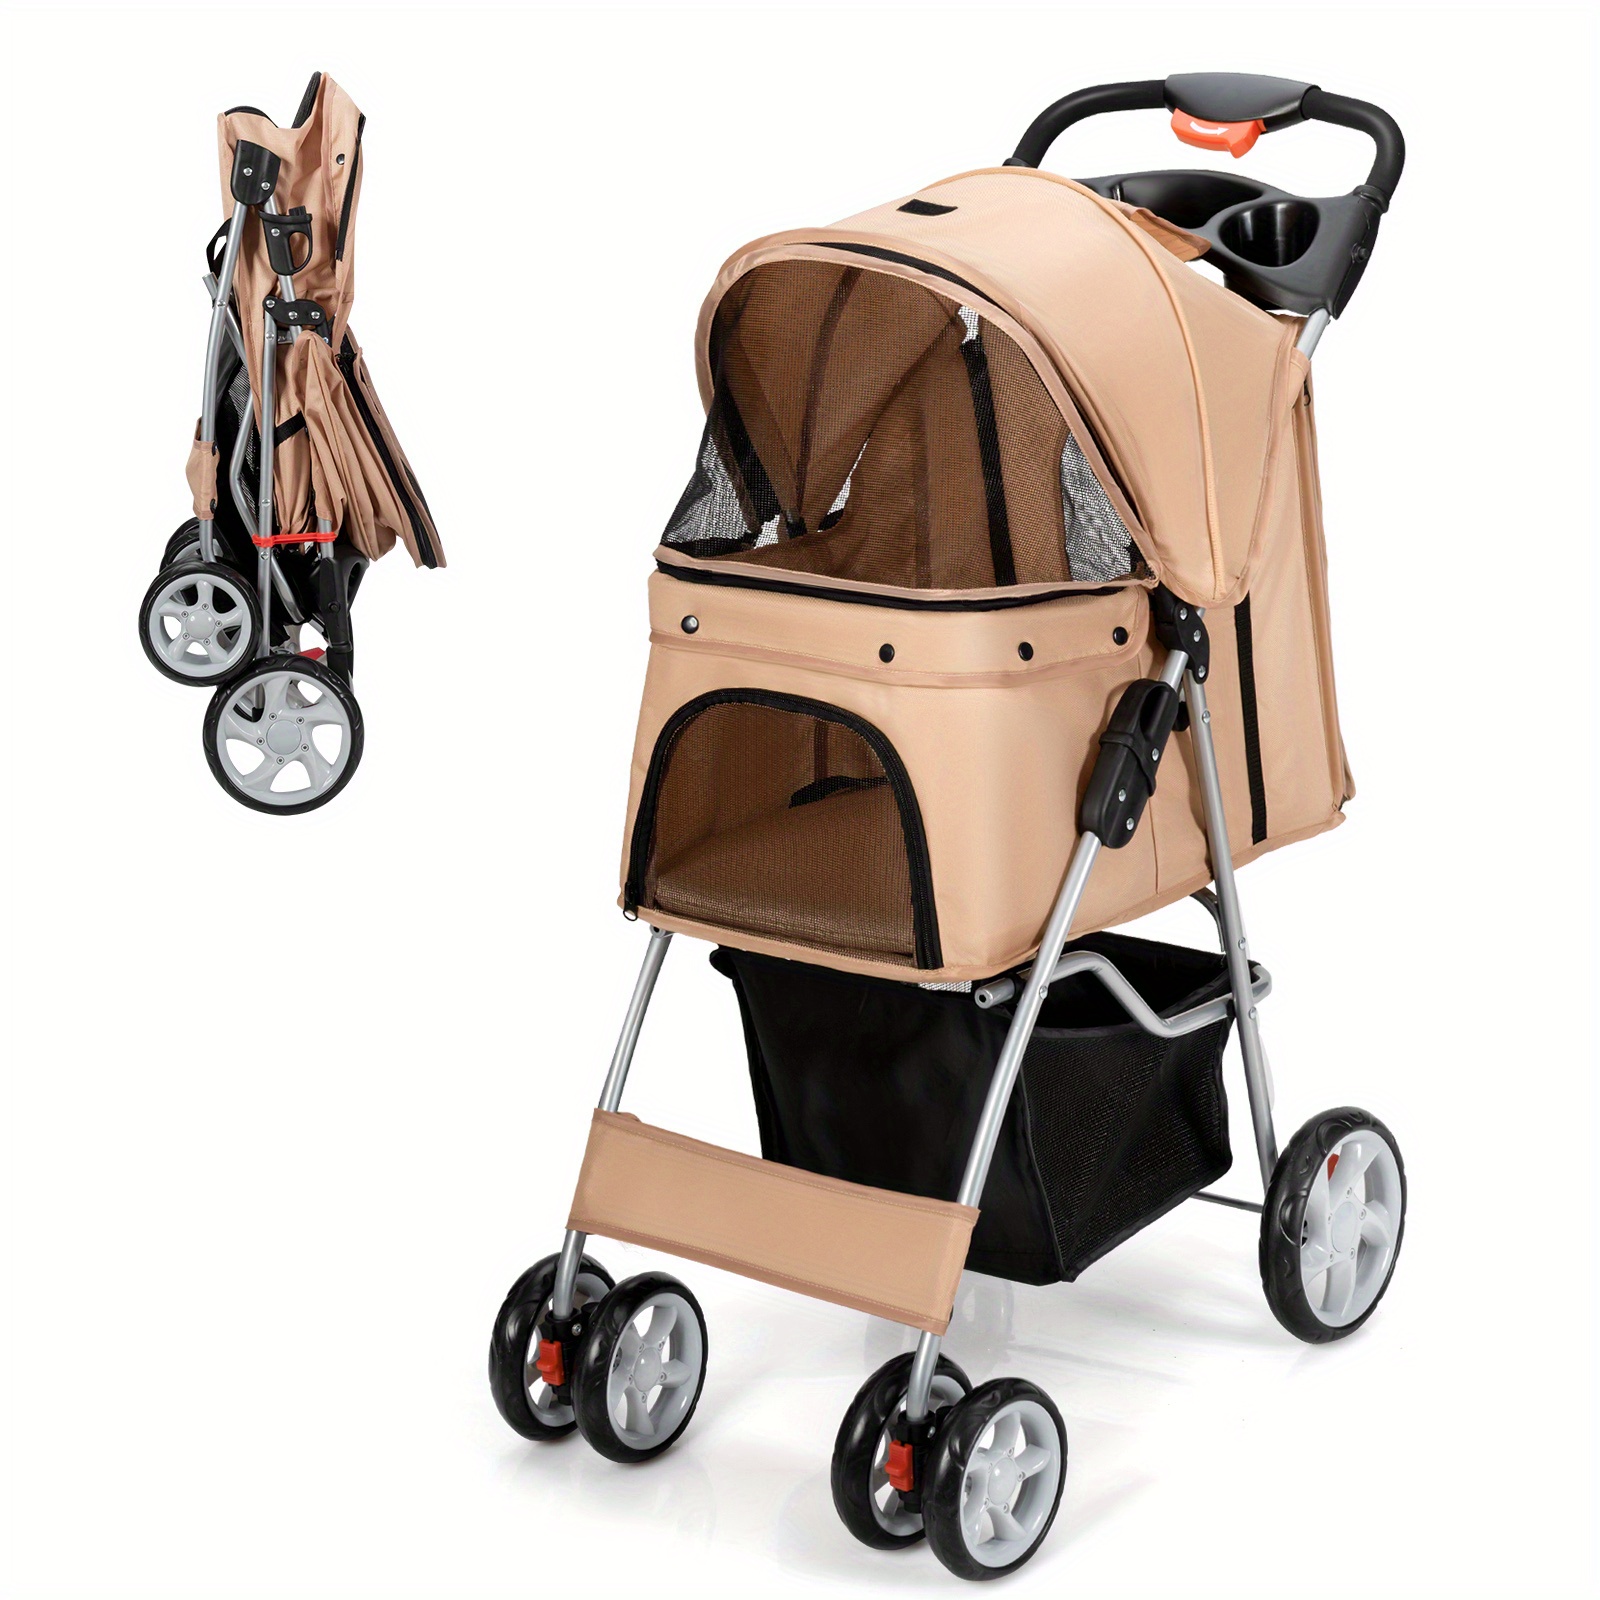 

Safstar Folding Pet Stroller 4-wheel Pet Travel Carrier W/storage Basket Beige